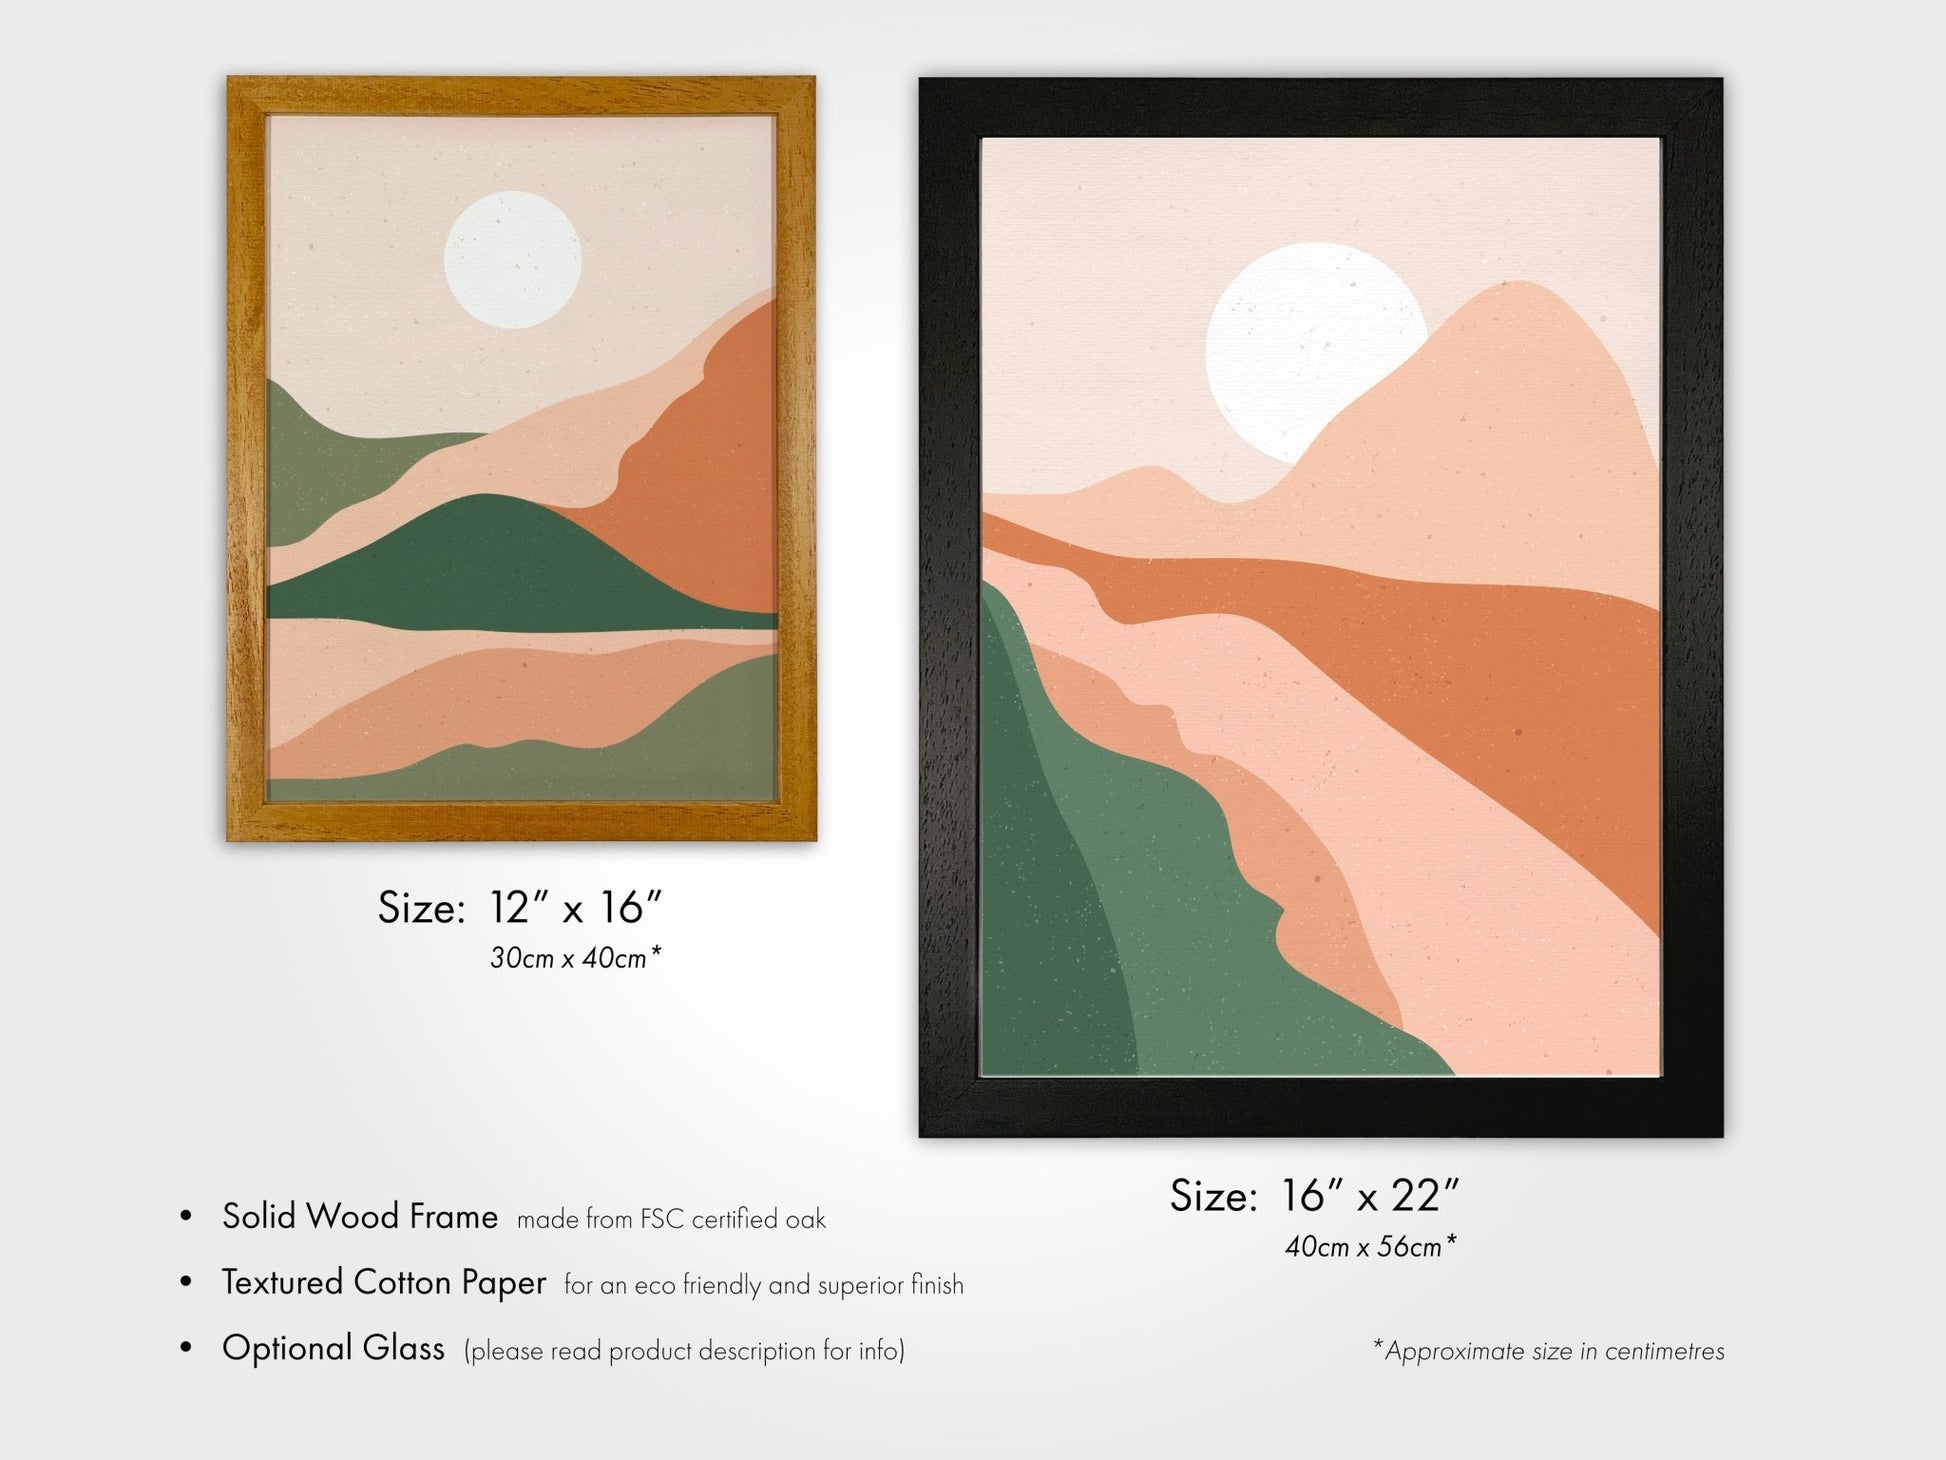 Abstract Green Hills Print 3 - Pathos Studio - Art Prints